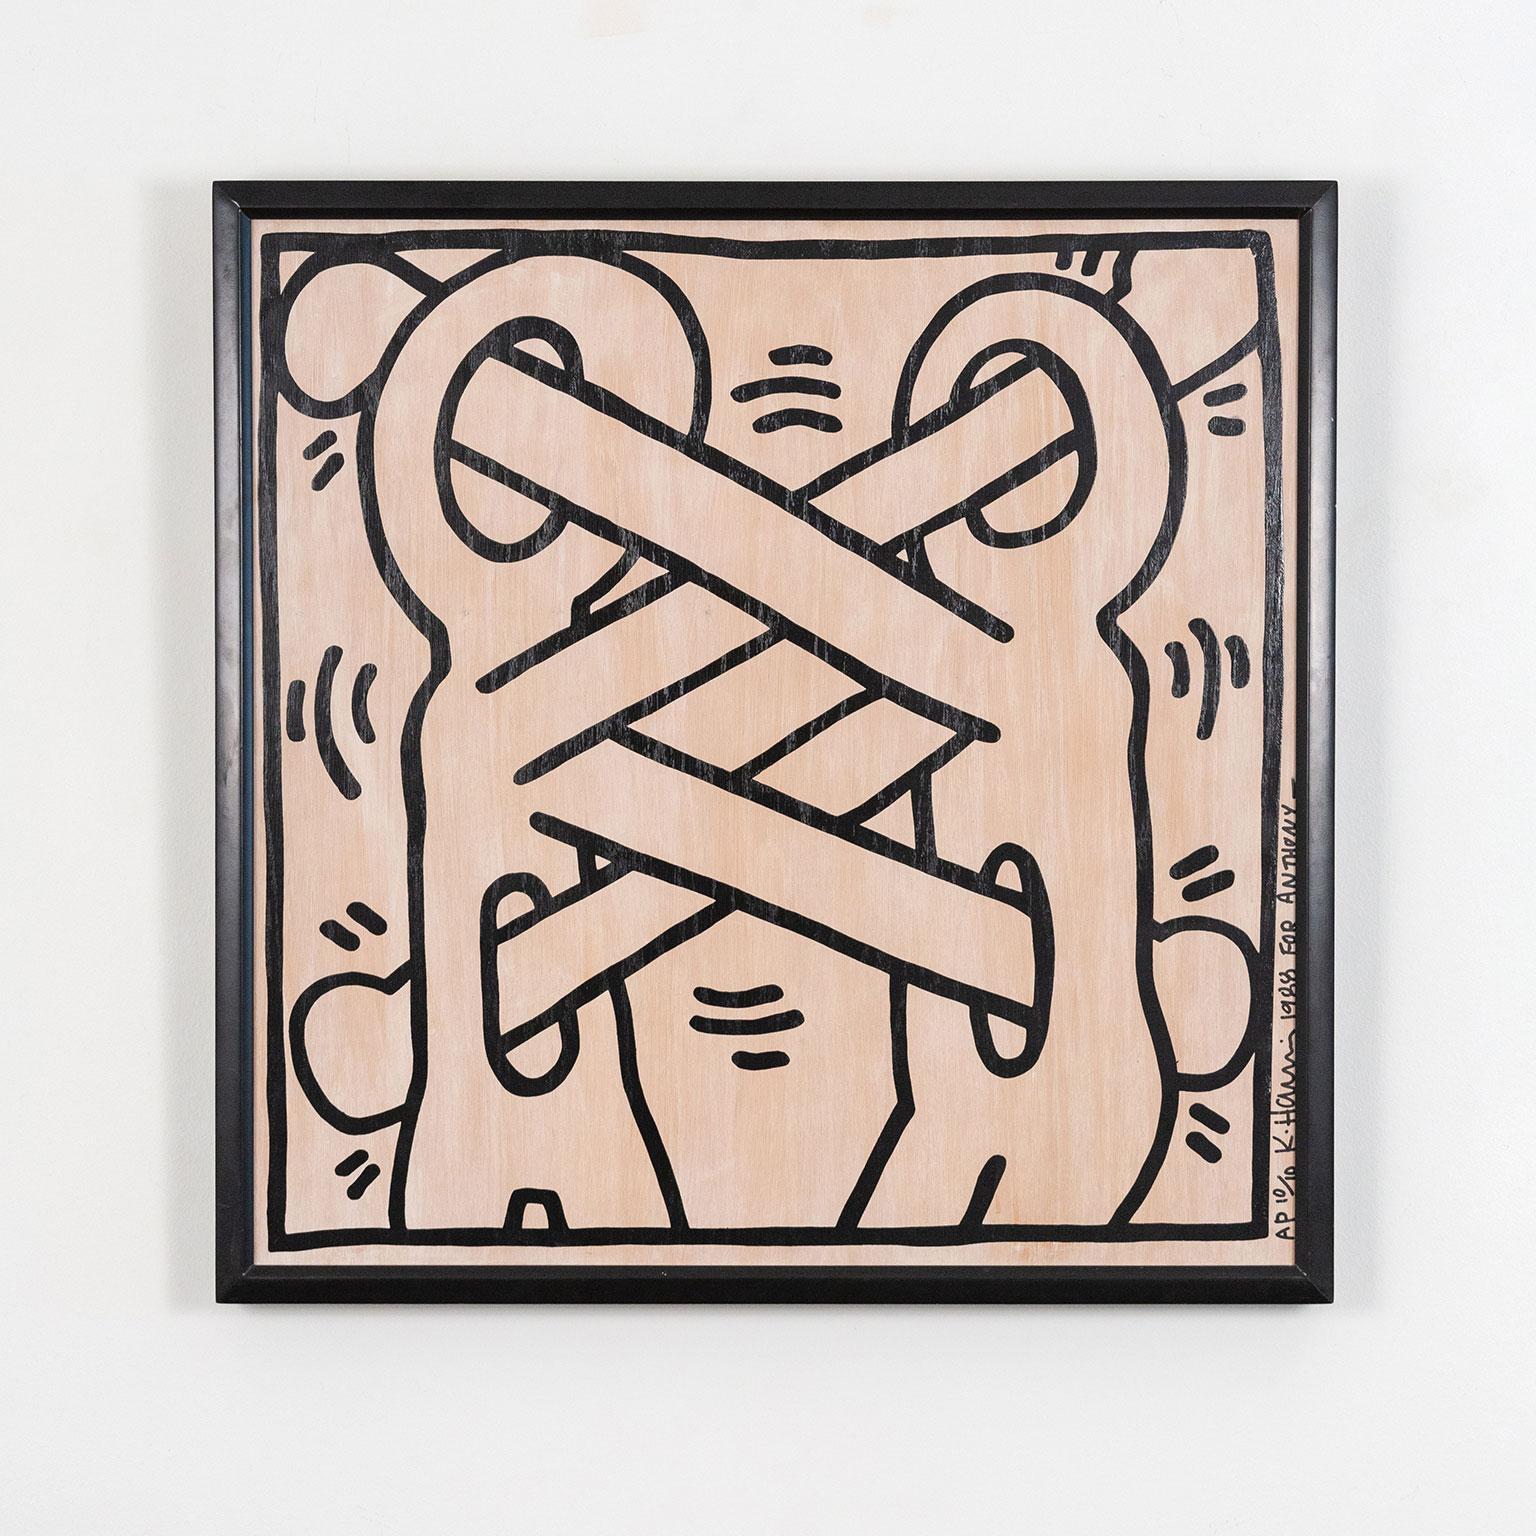 L'art s'attaque au sida - Print de Keith Haring